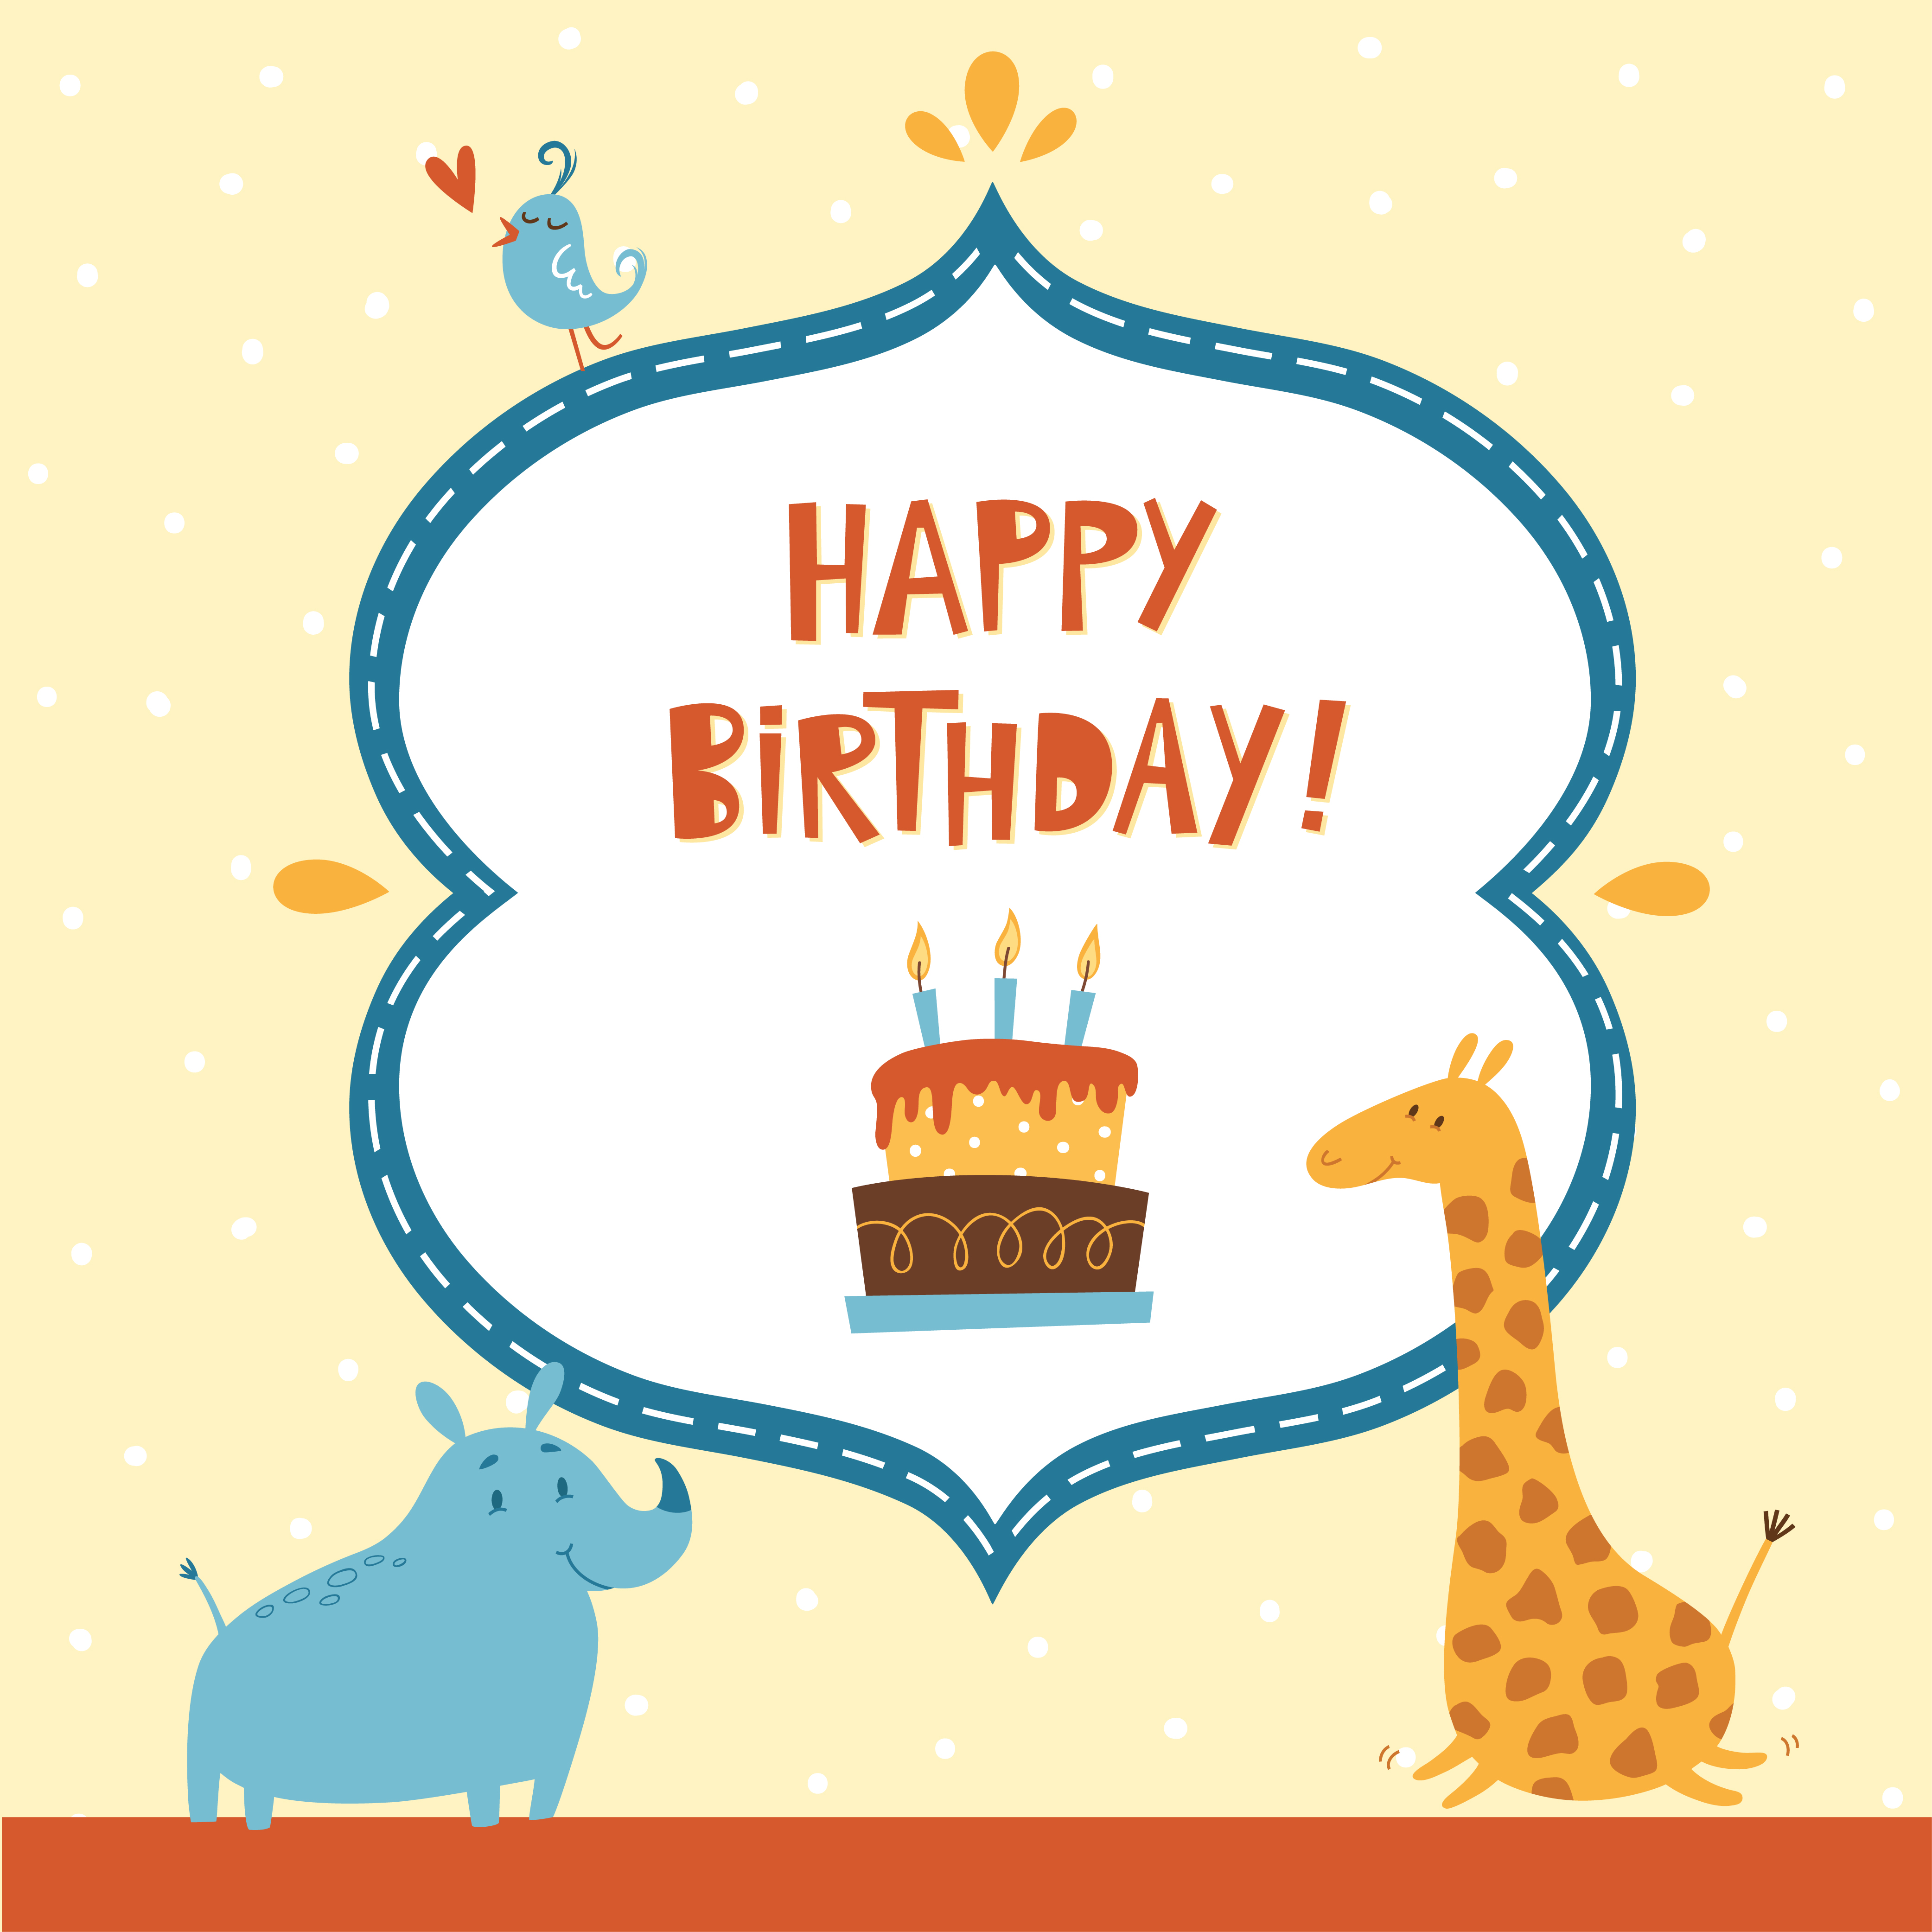 Happy Birthday card with cute animals Photoshop brush